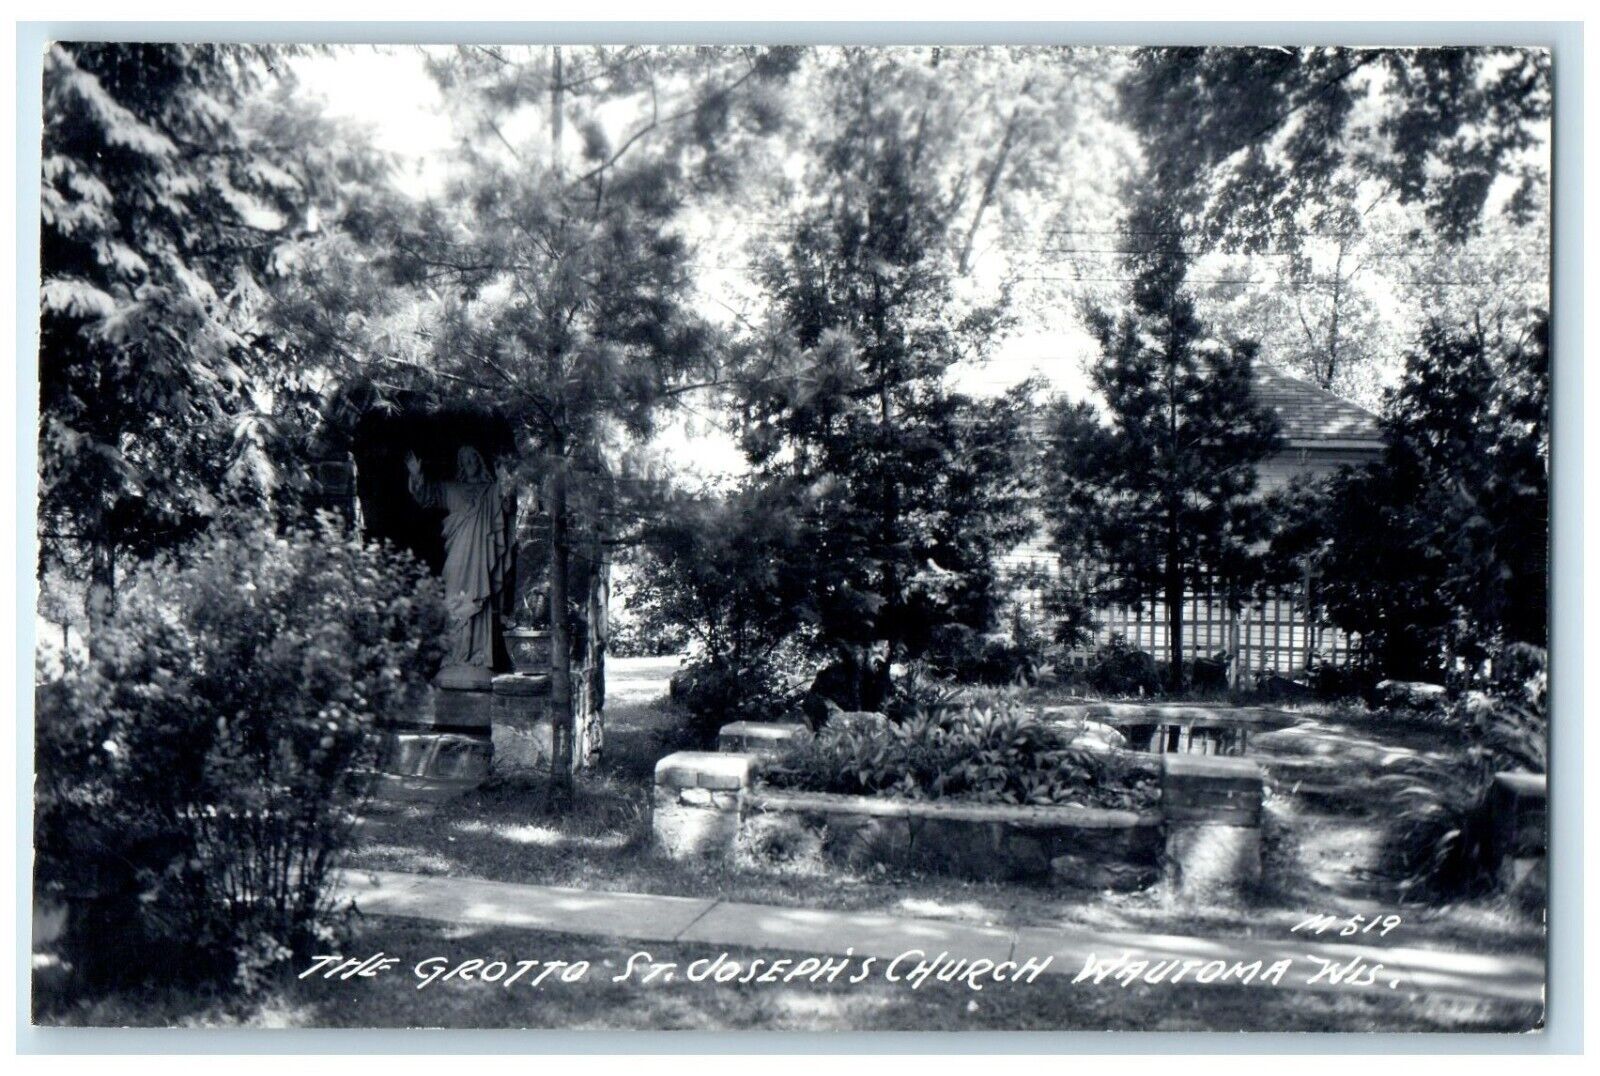 1949 The Grotto St. Joseph's Church Wautoma Wisconsin WI RPPC Photo Postcard